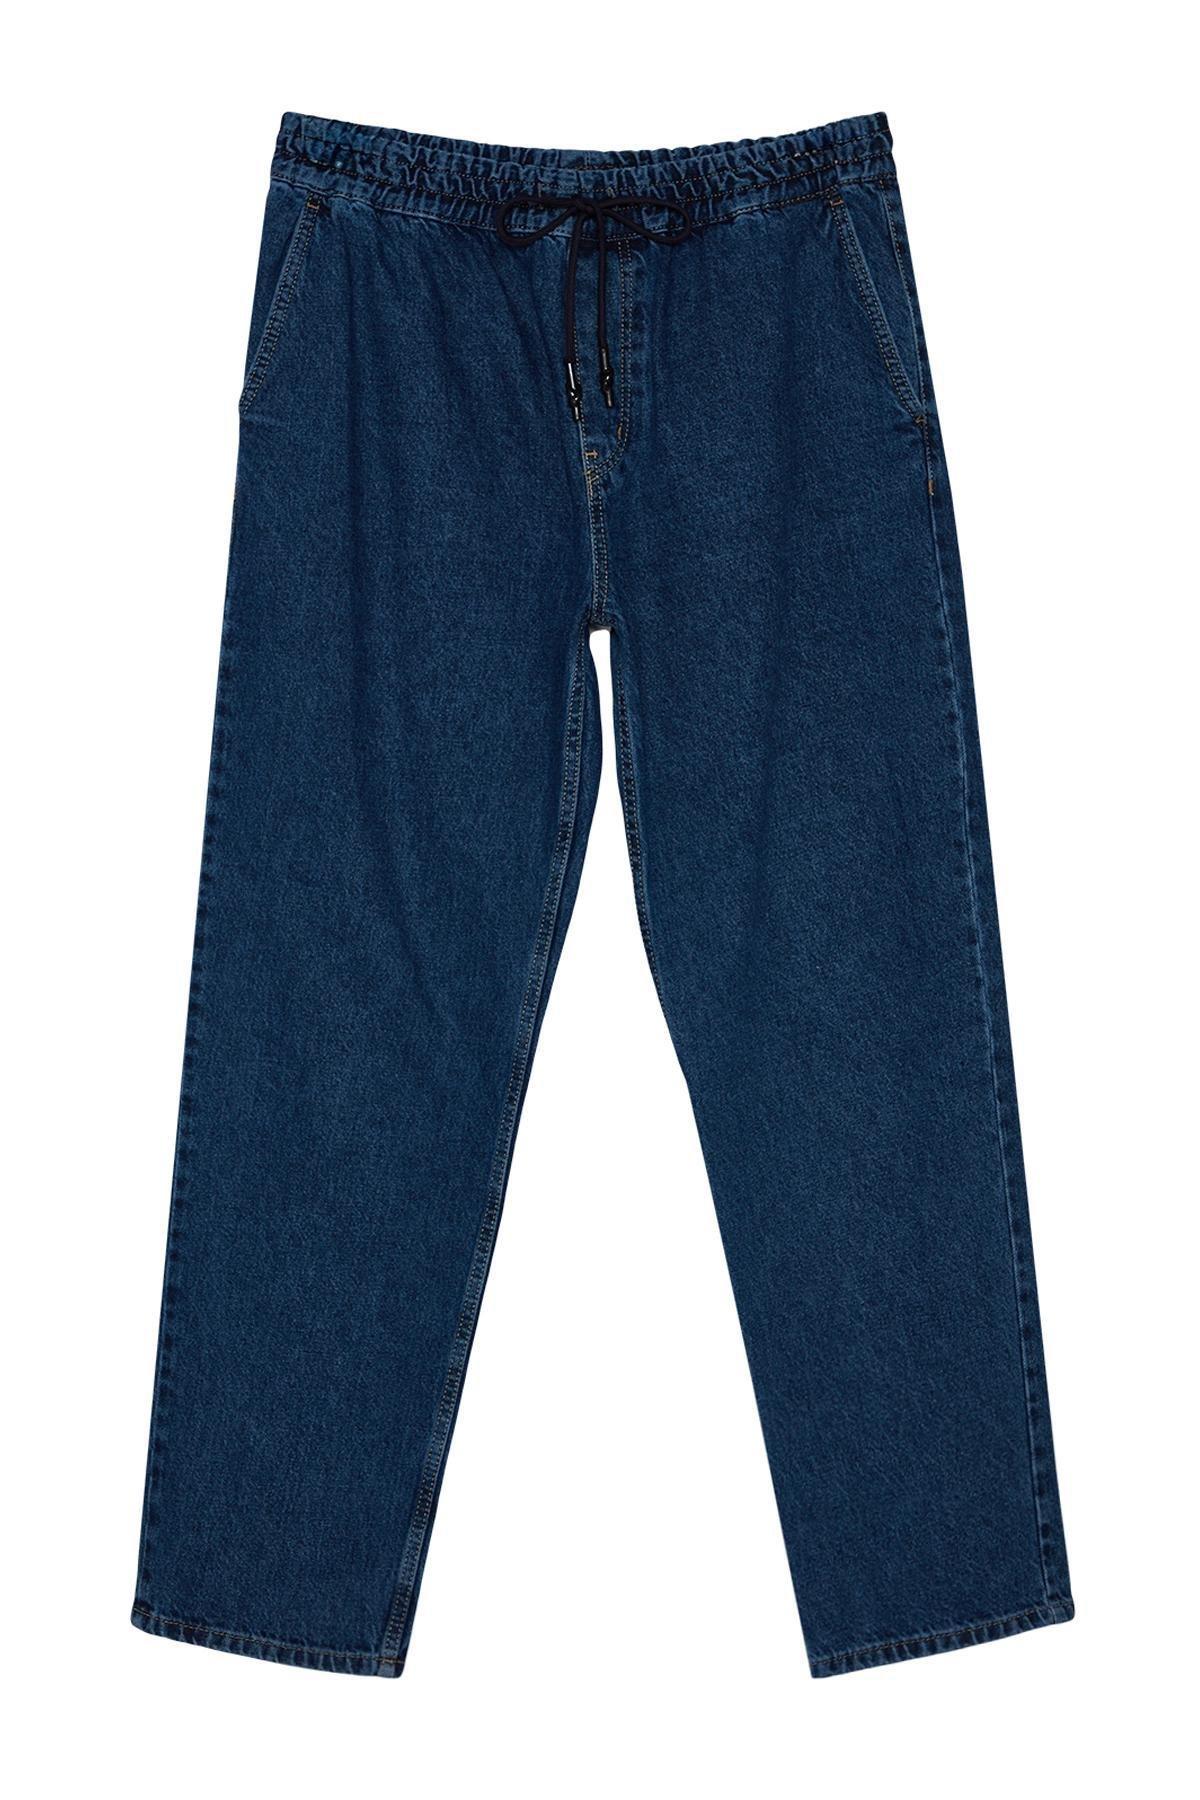 Trendyol - Navy Regular Fit Elastic Waist Jeans